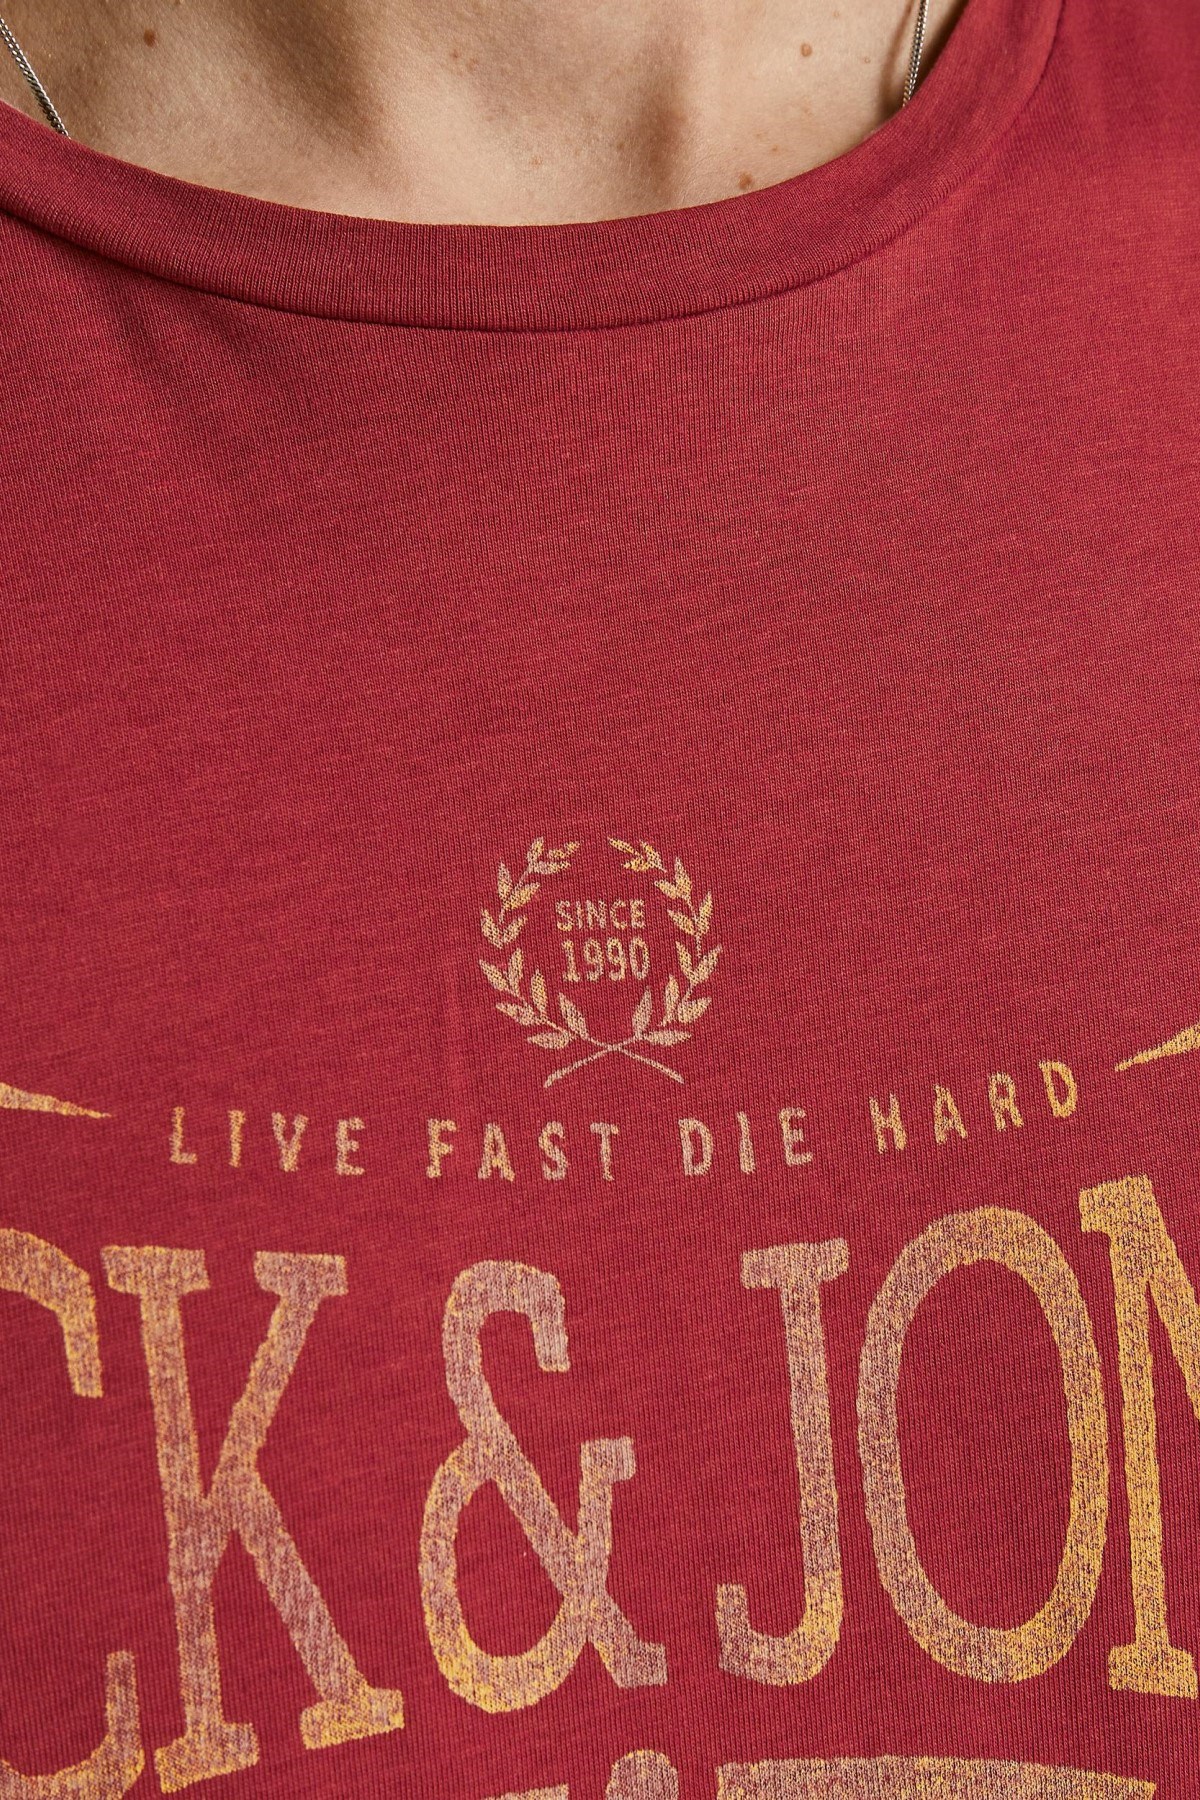 Jack Jones Erkek T-Shirt 12208452 Brick Red